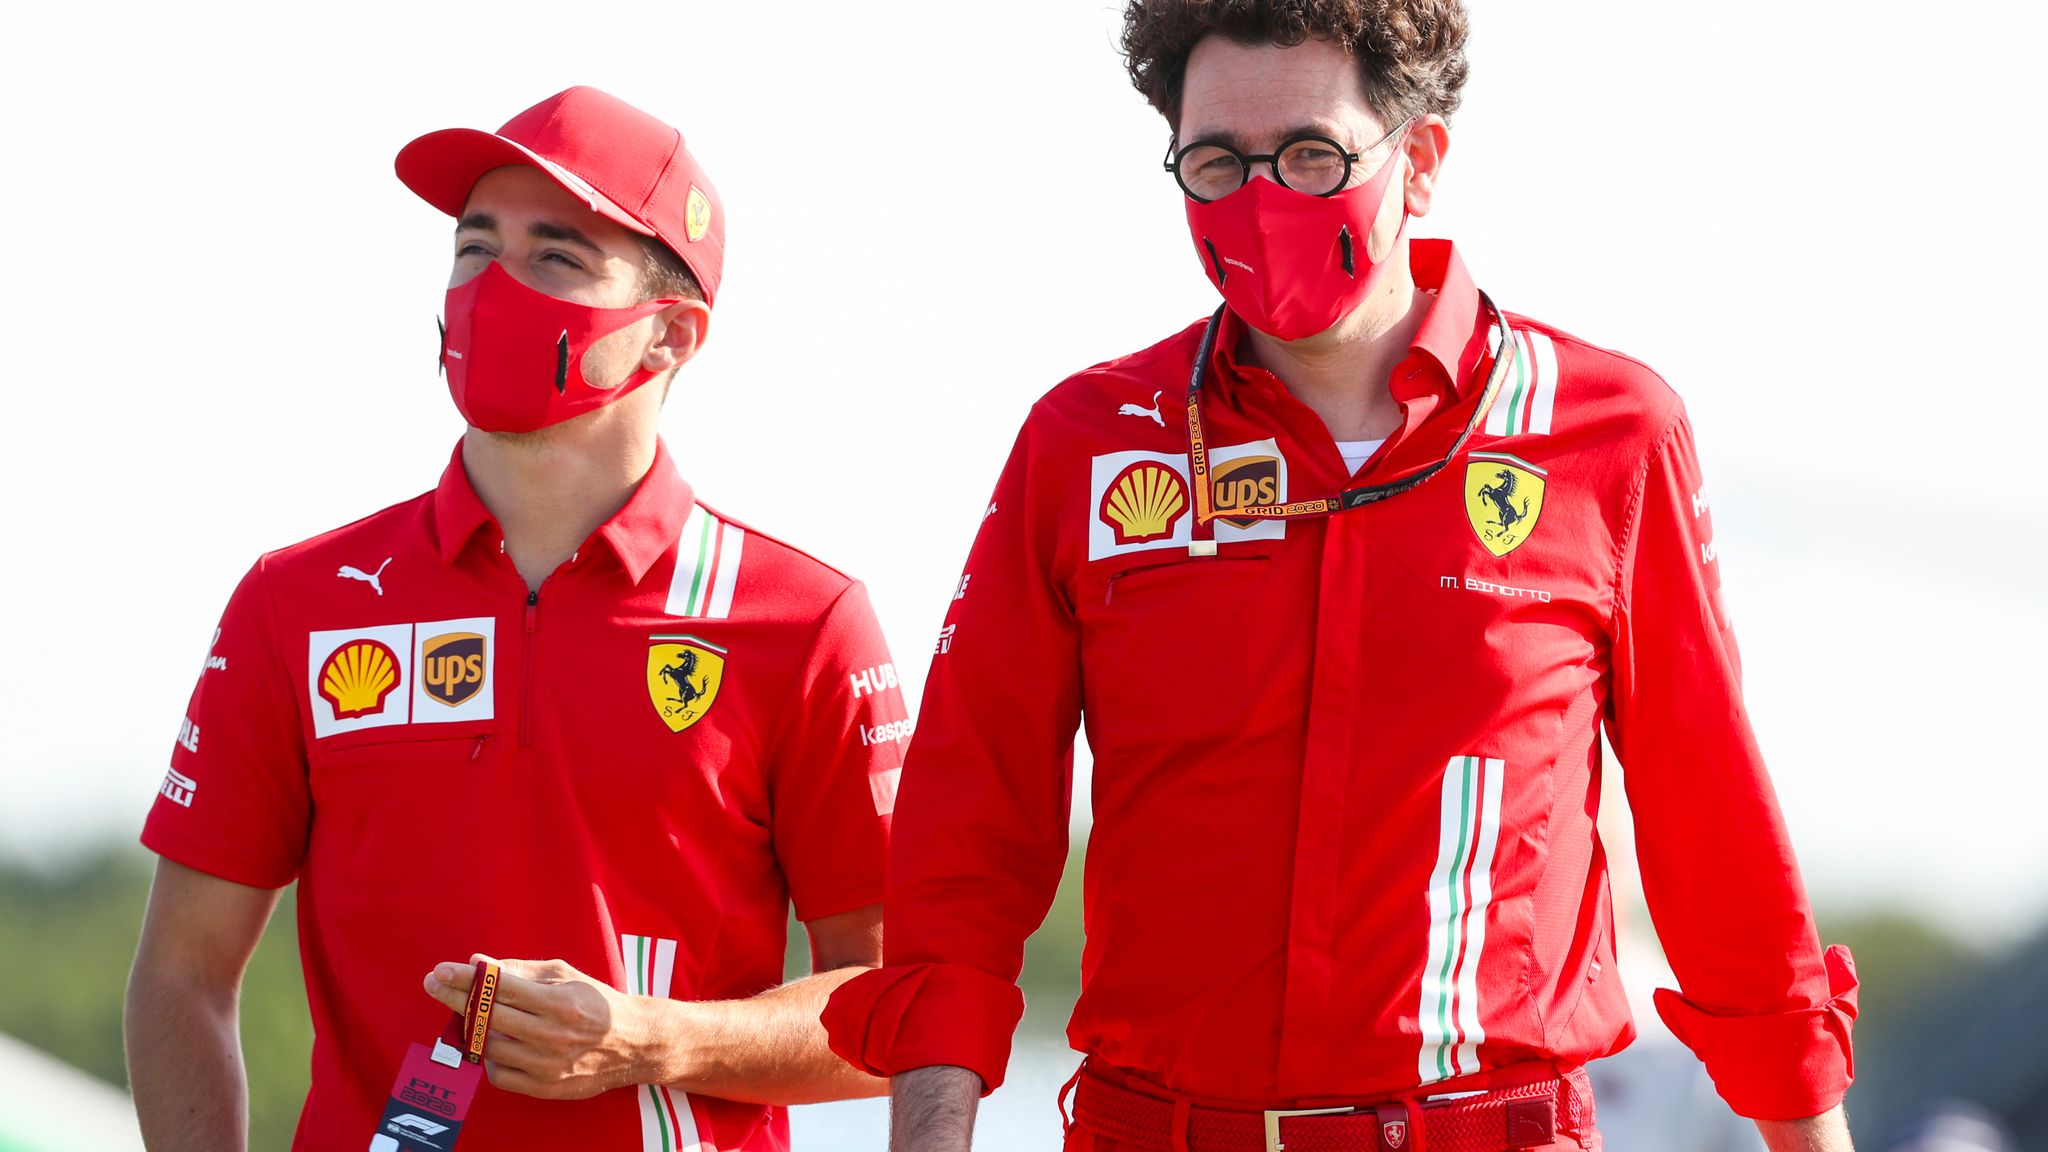 Ferrari drivers Charles Leclerc and Carlos Sainz return on track next week  in Barcelona